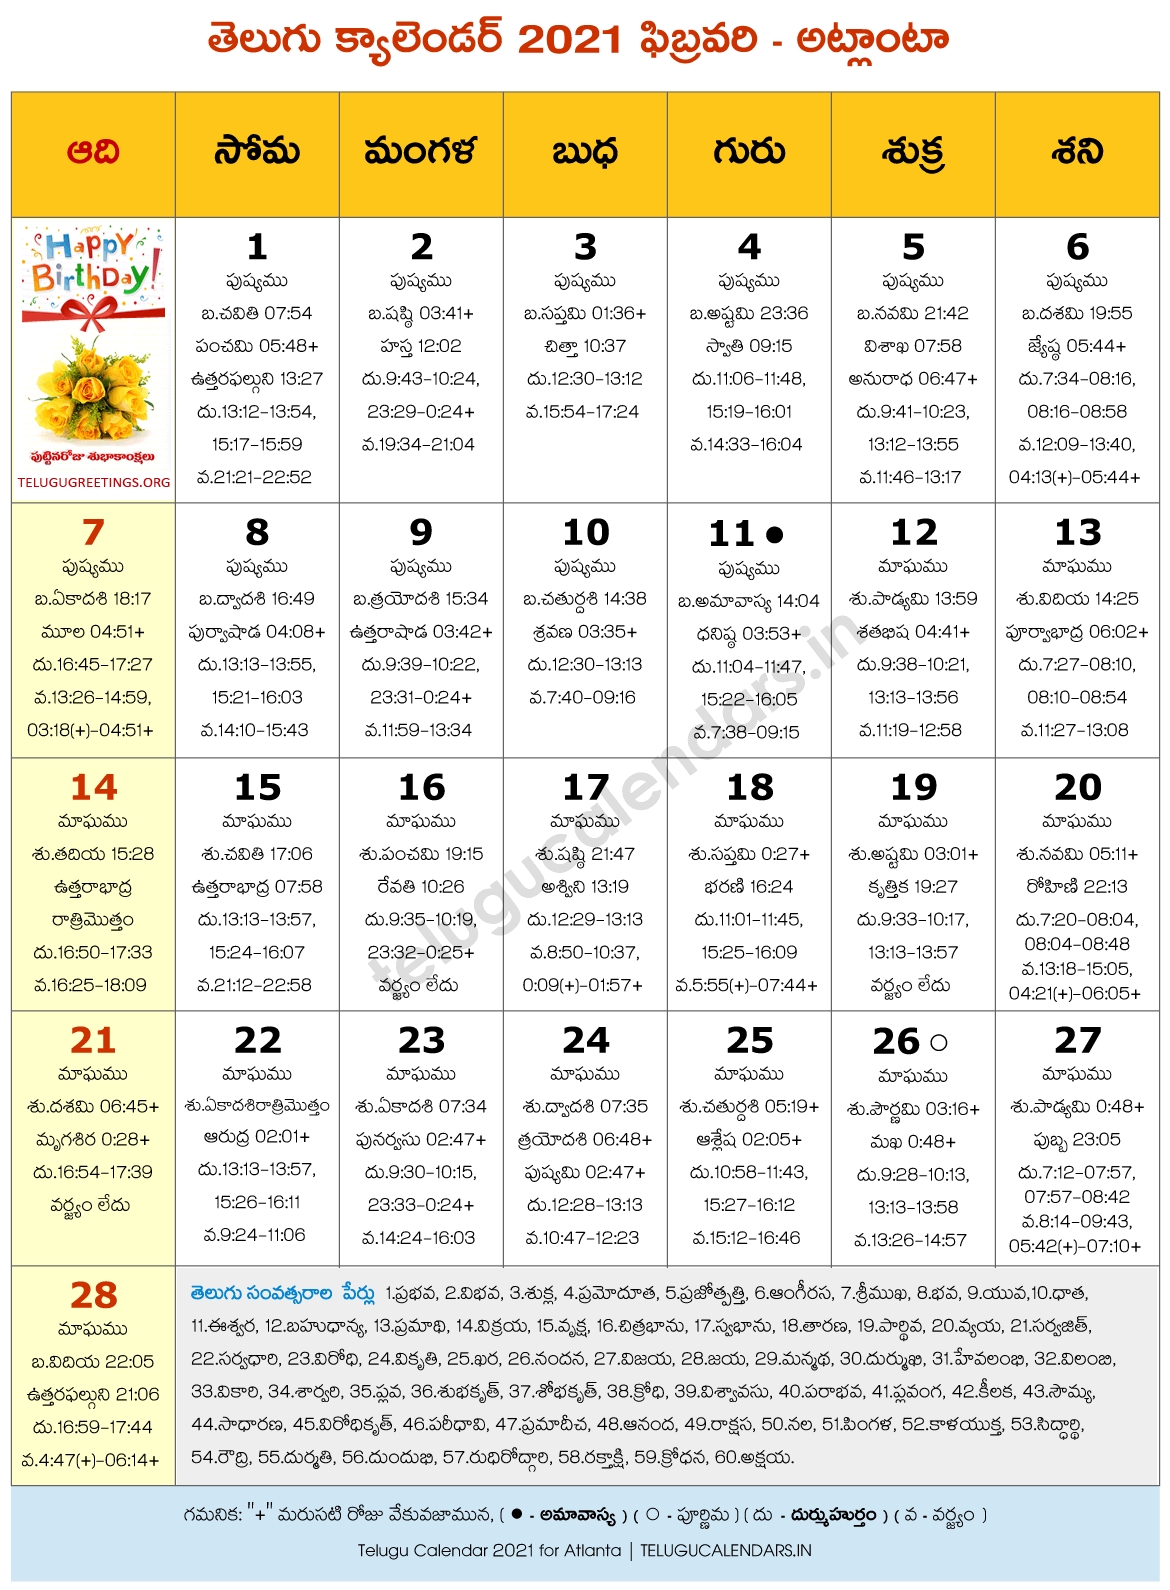 Atlanta 2021 February Telugu Calendar | Telugu Calendars July 2021 Telugu Calendar Chicago